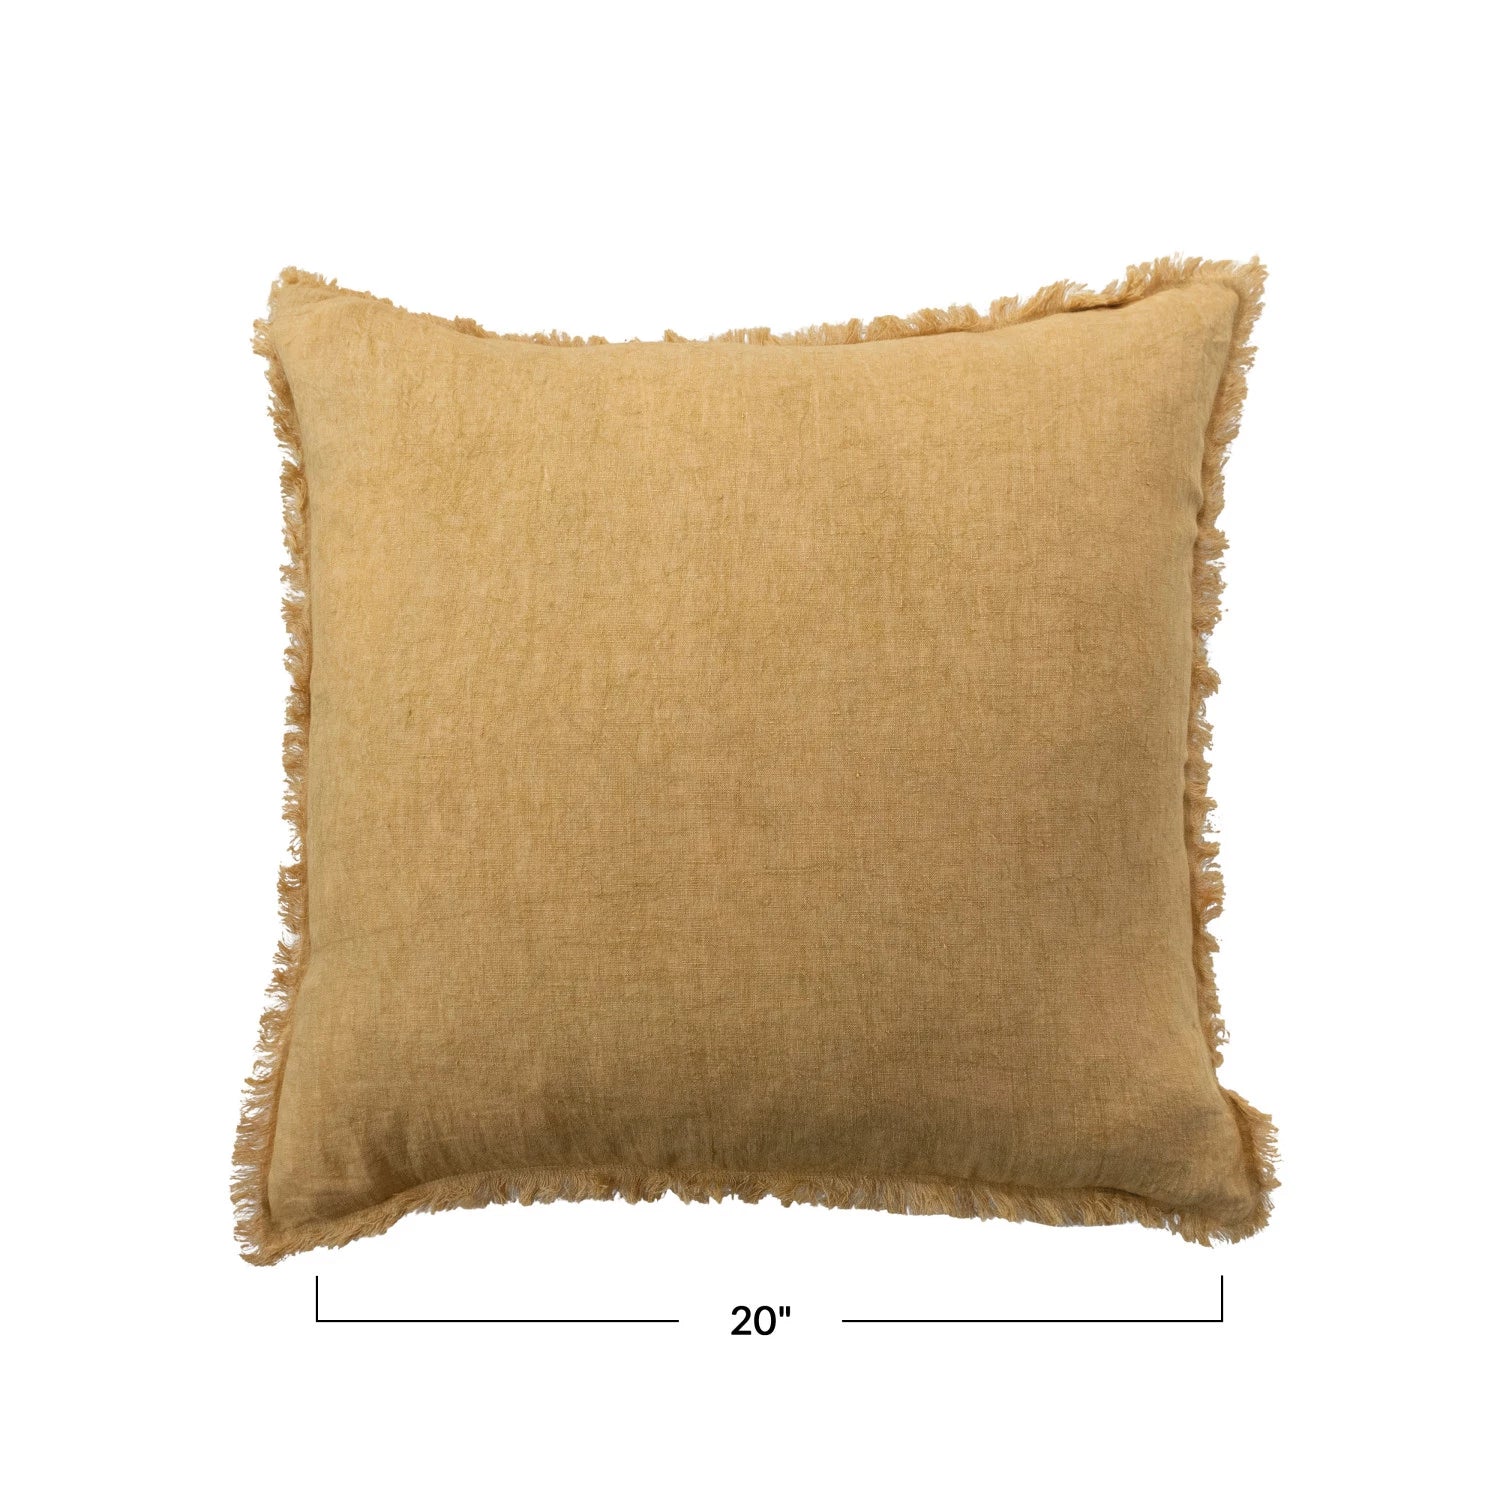 Mustard Square Stonewashed Linen Pillow w/ Fringe